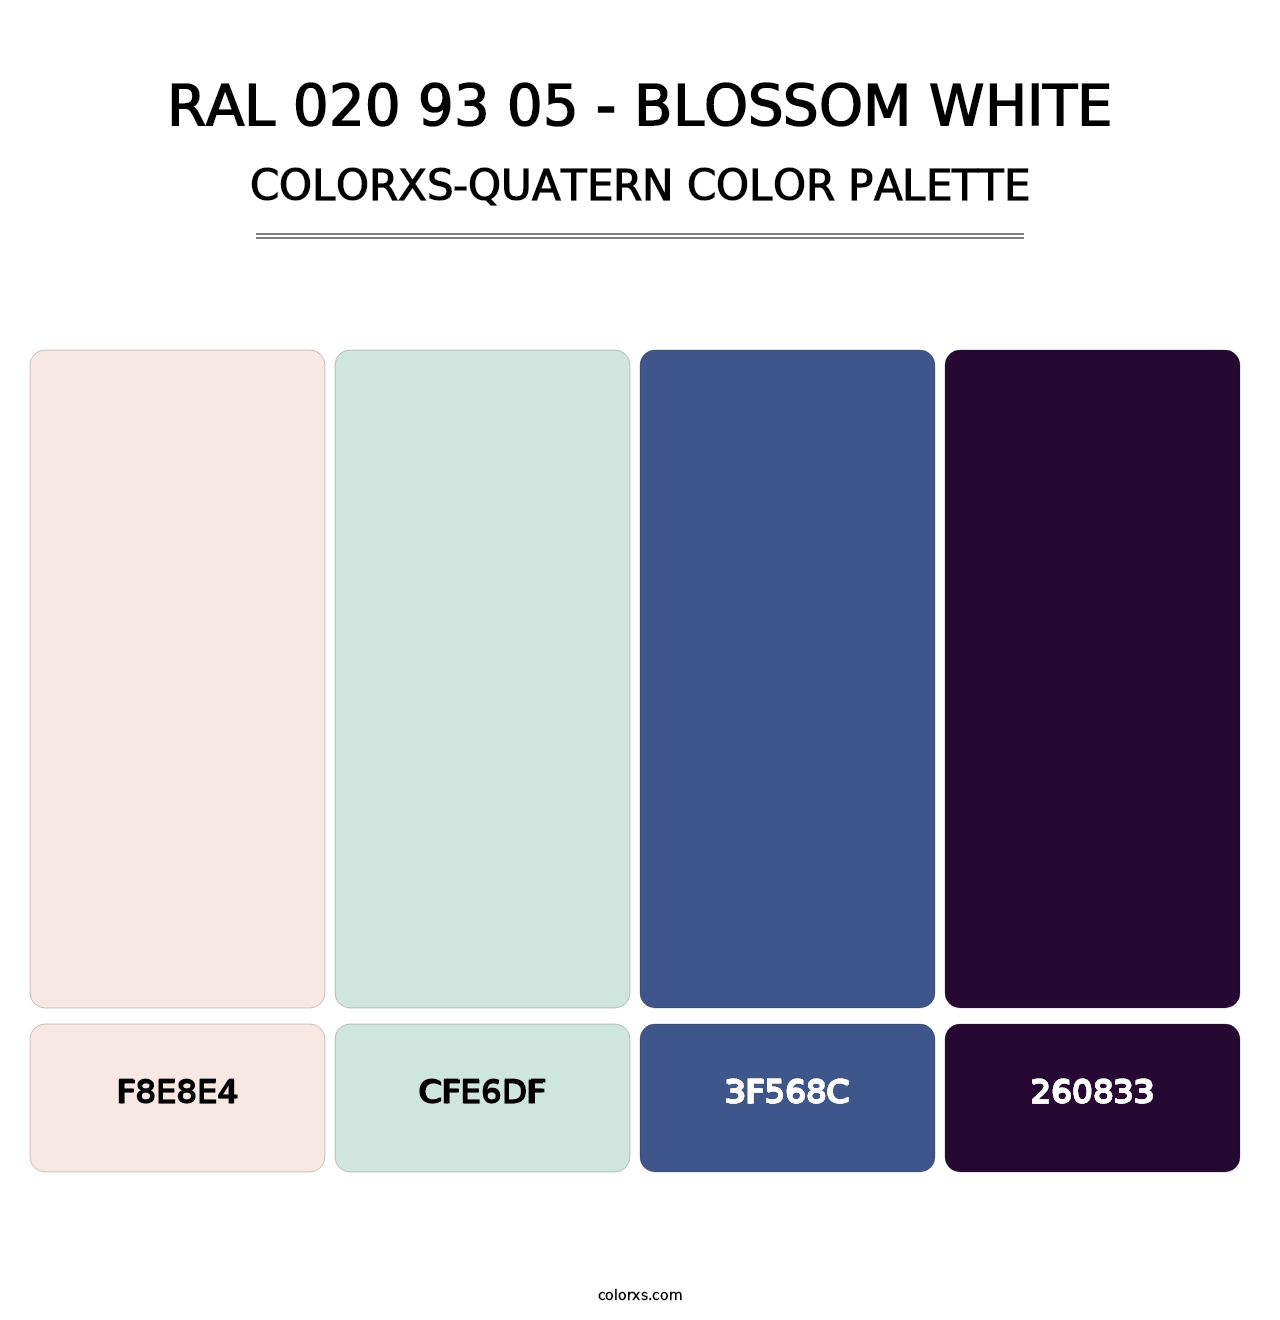 RAL 020 93 05 - Blossom White - Colorxs Quatern Palette